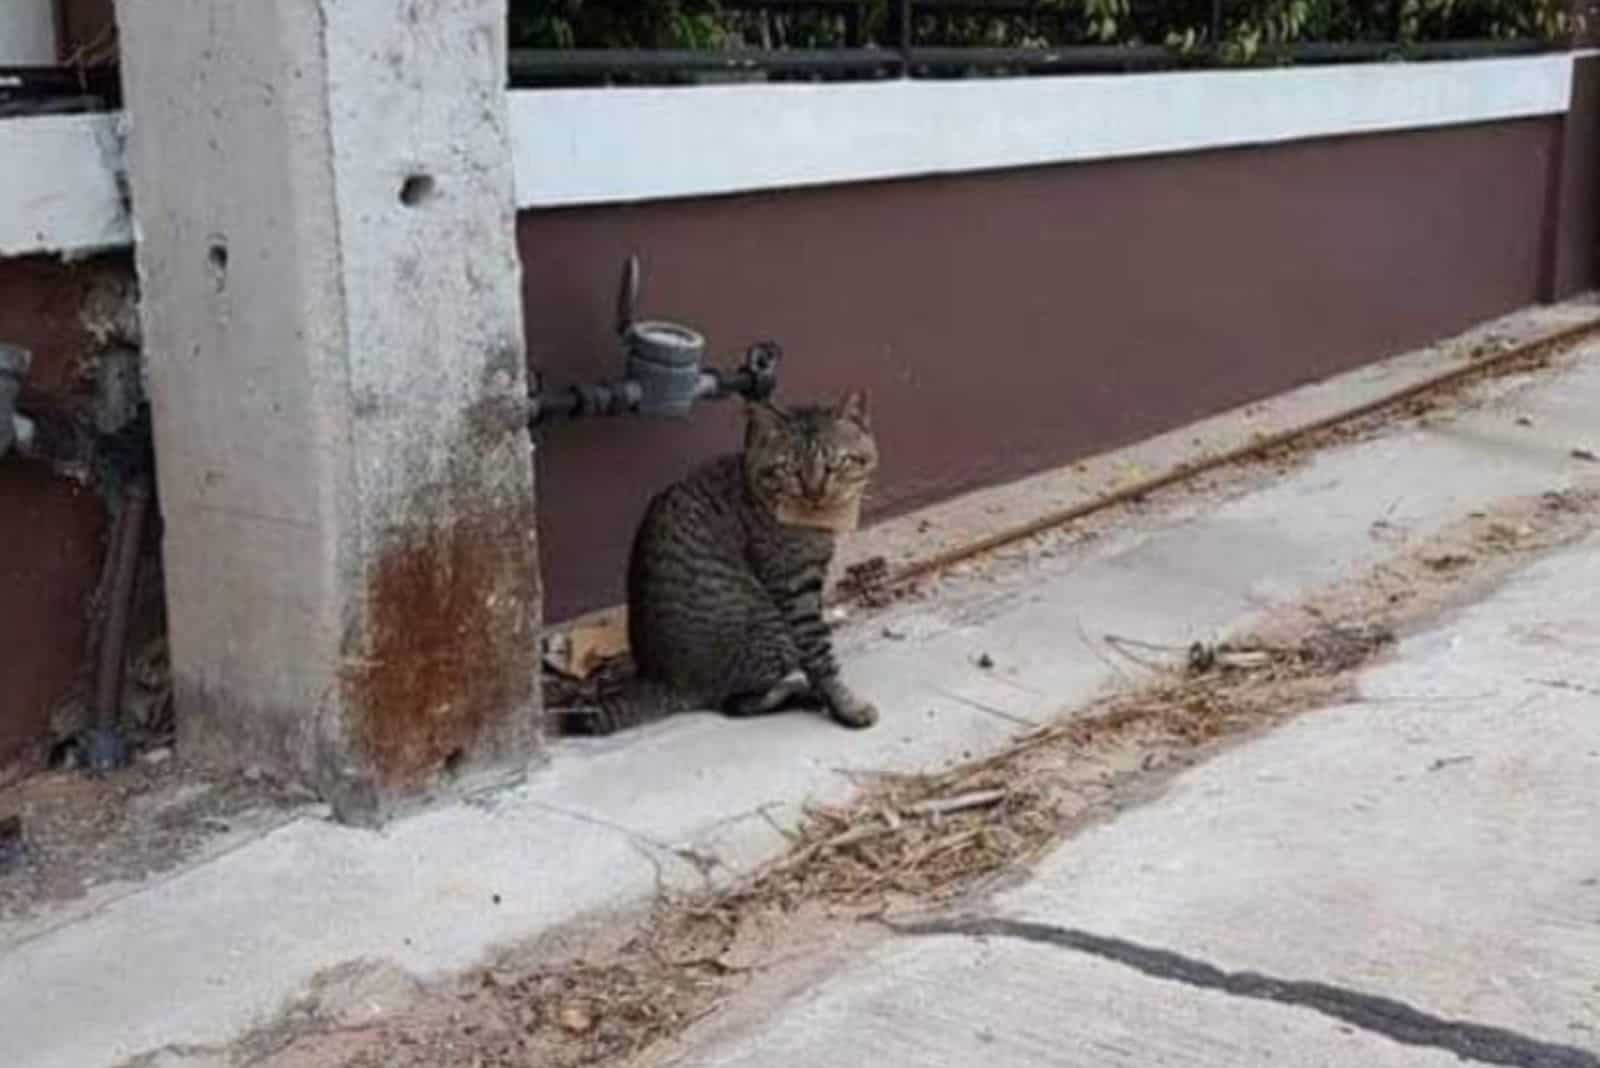 adventurous cat photographed on the street